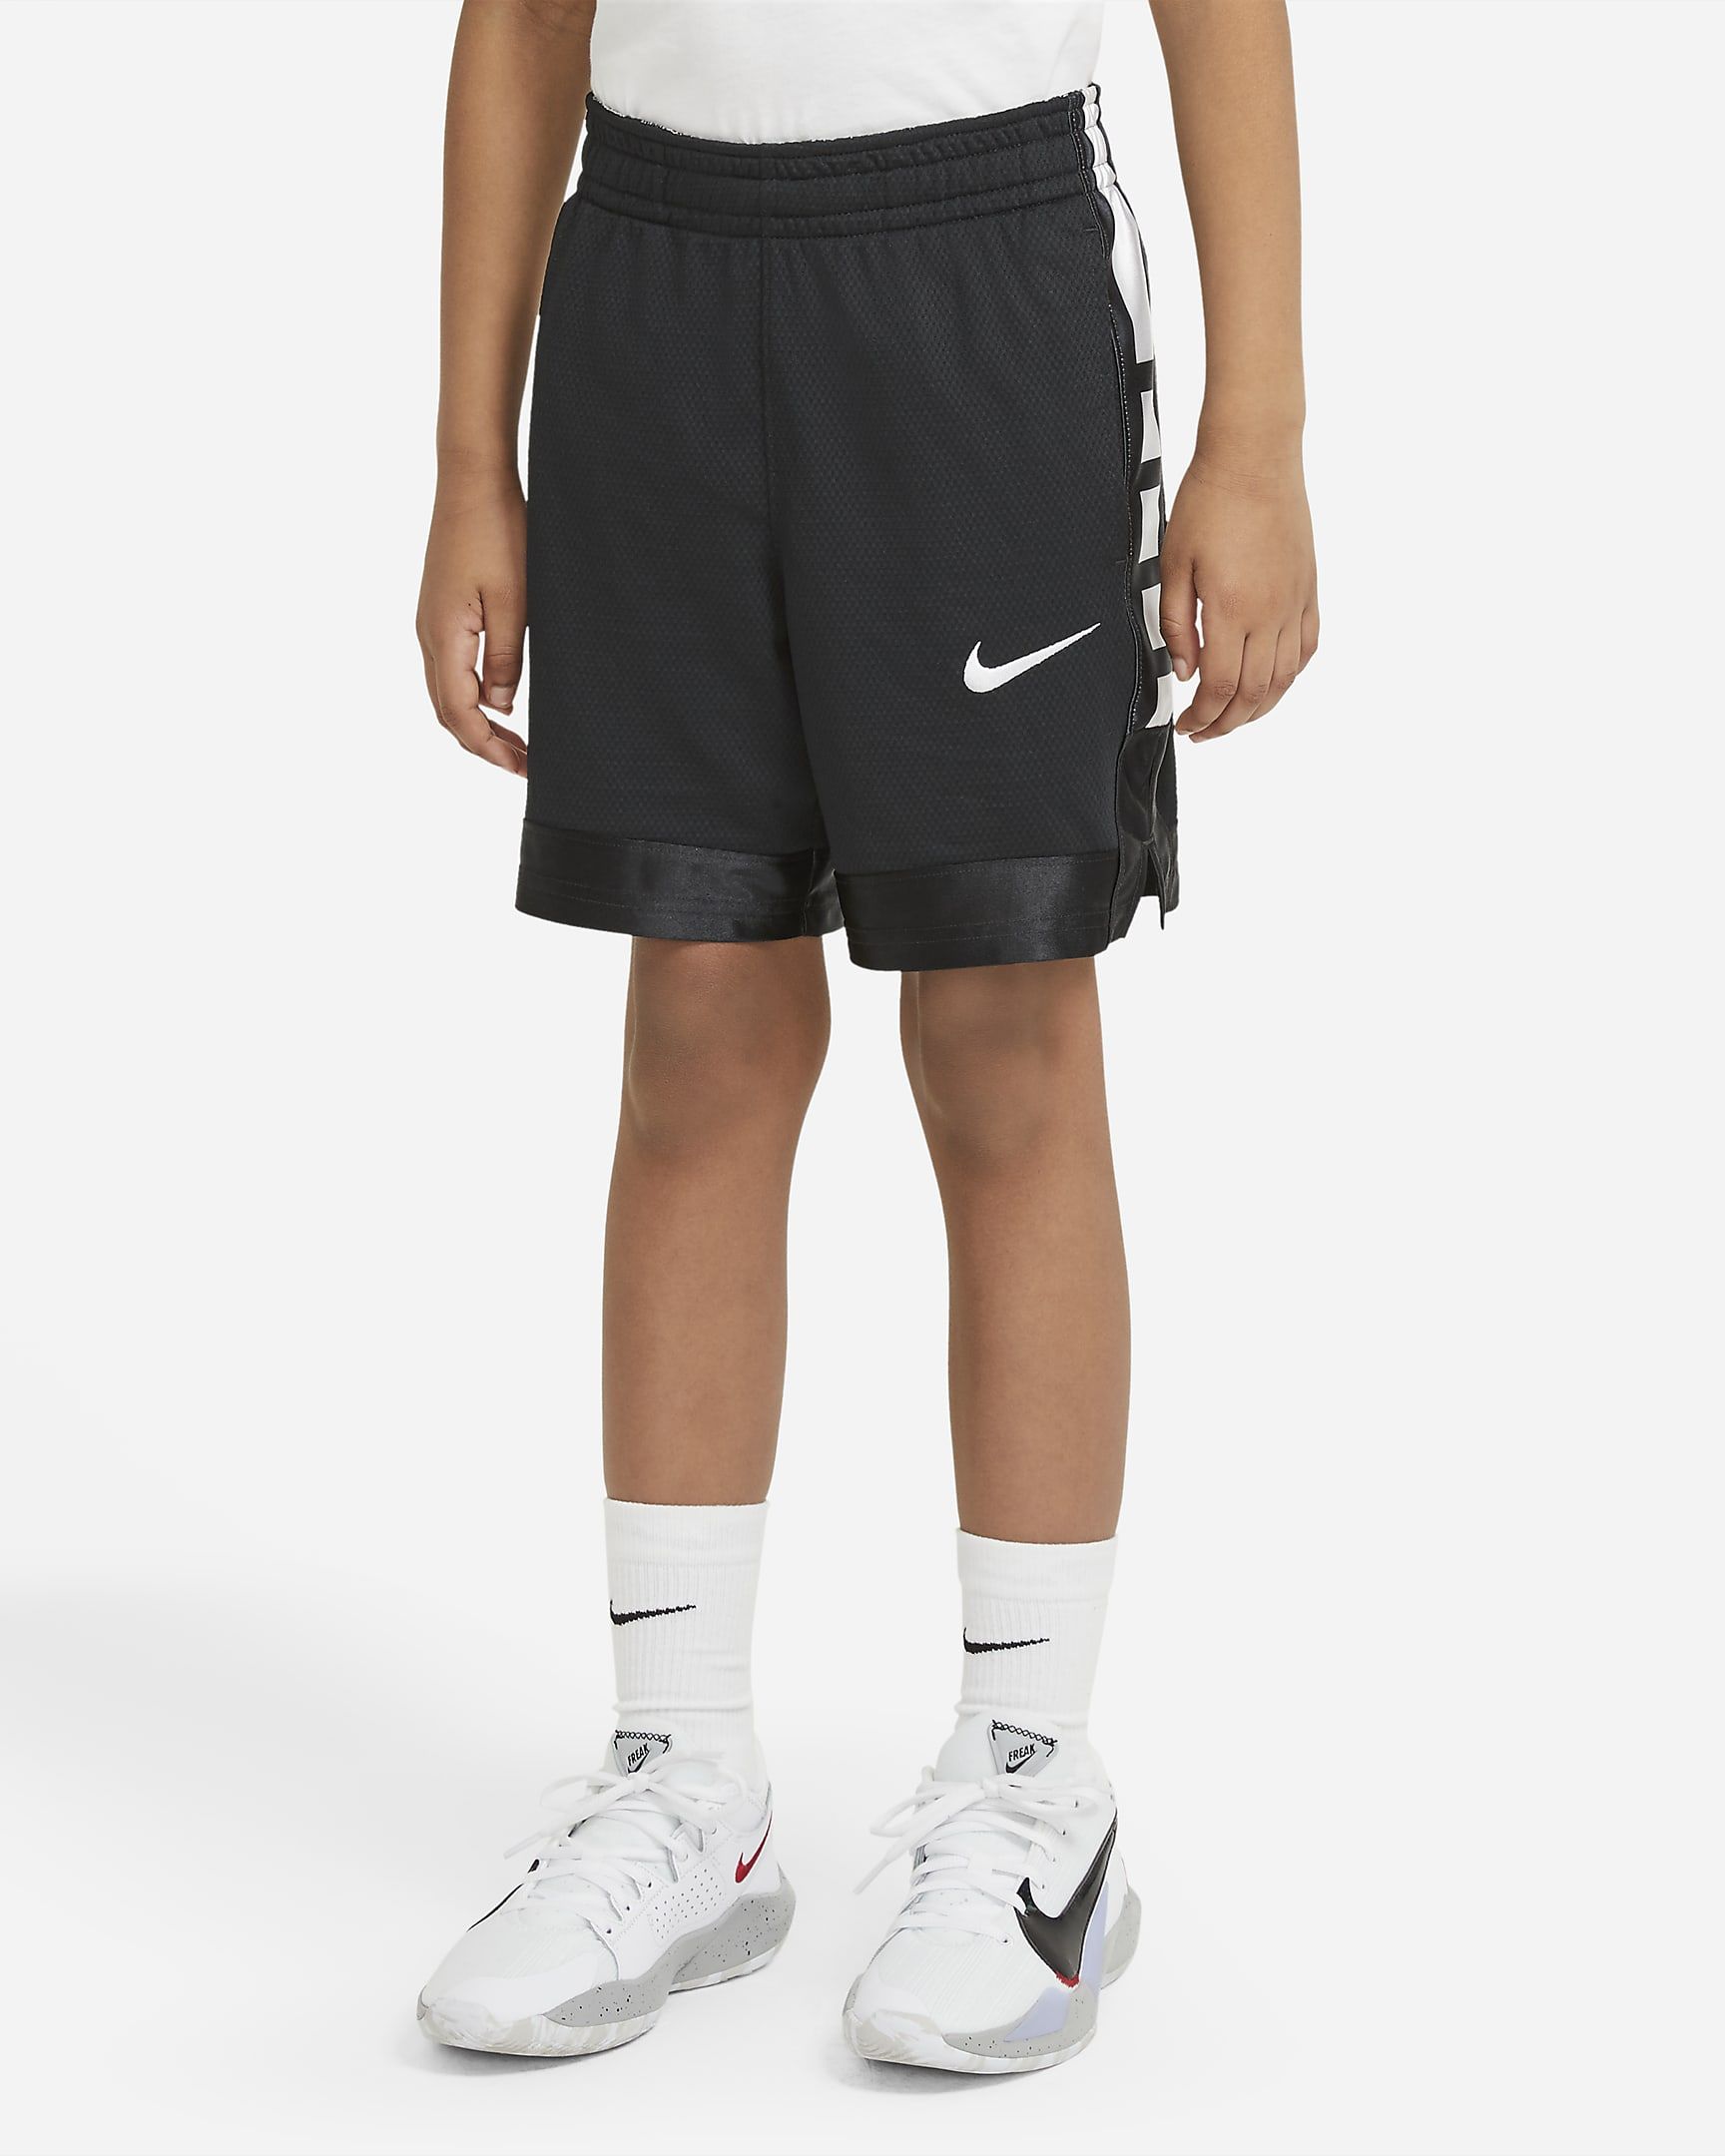 Nike Dri-FIT Elite Big Kids' (Boys') Basketball Shorts. Nike.com | Nike (US)